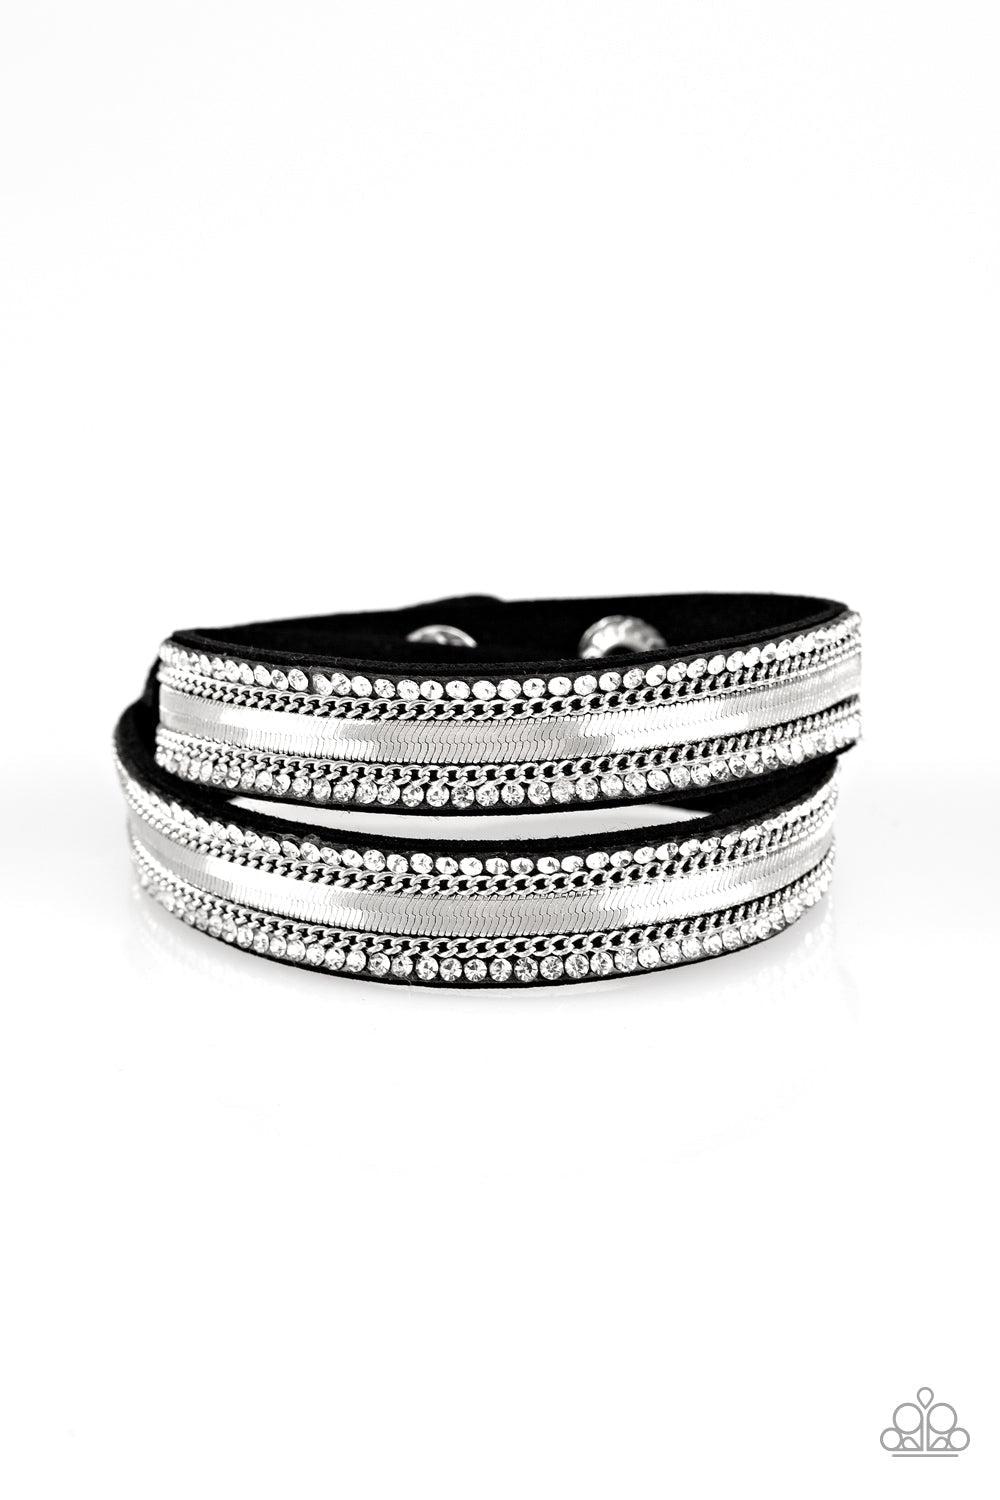 Rocker Rivalry Black Double-wrap Bracelet - Paparazzi Accessories- lightbox - CarasShop.com - $5 Jewelry by Cara Jewels